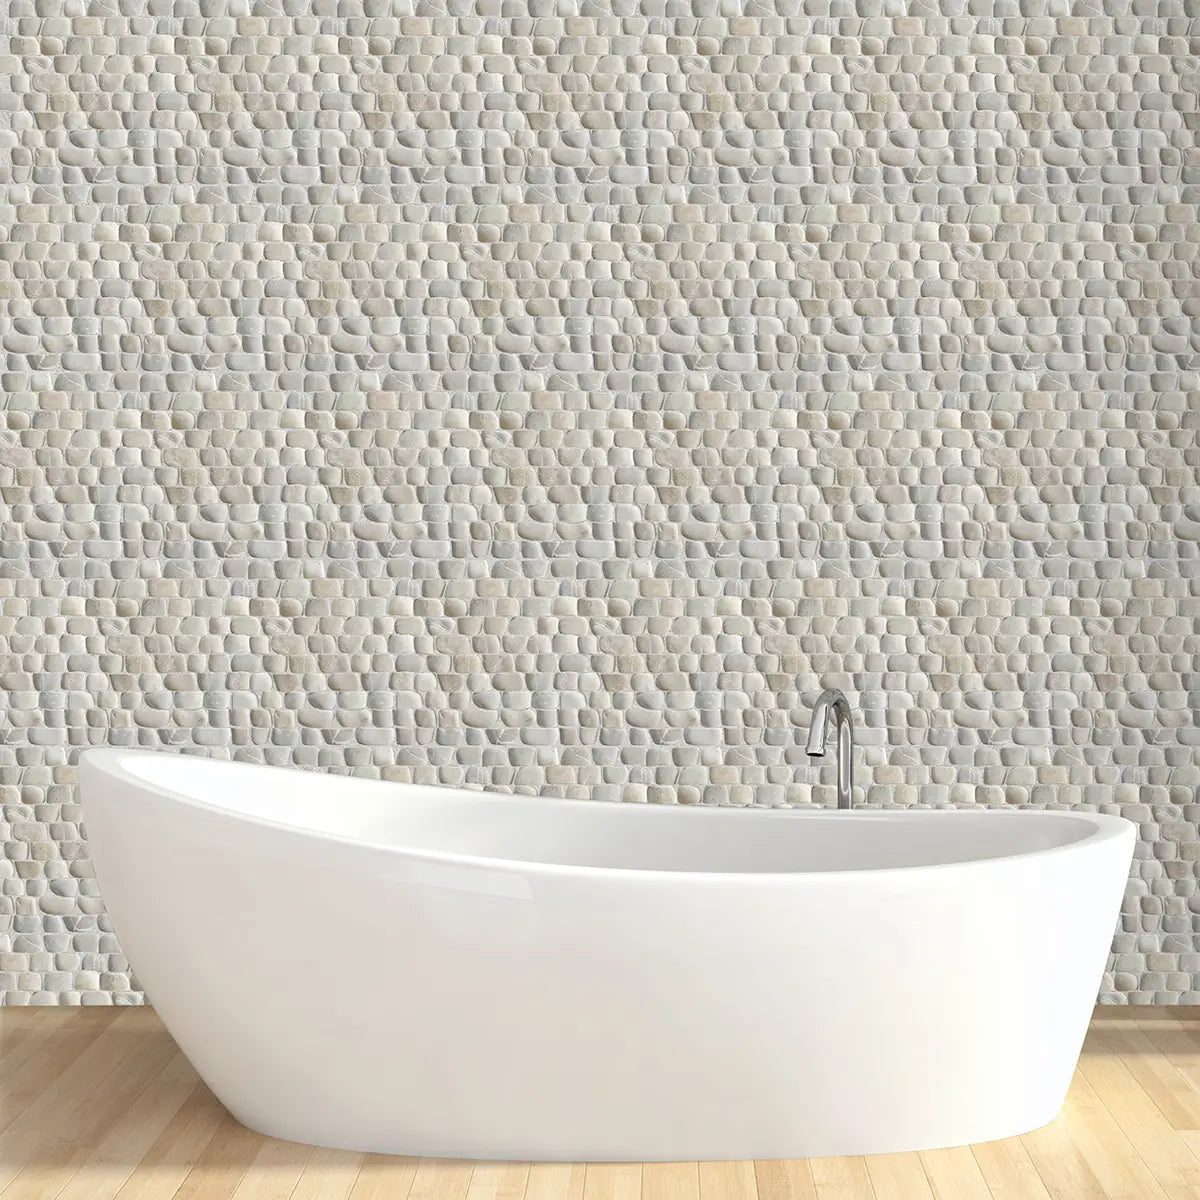 Tan Stone Mosaic Tiles for Wall, Striped Pebble Mosaic Tile